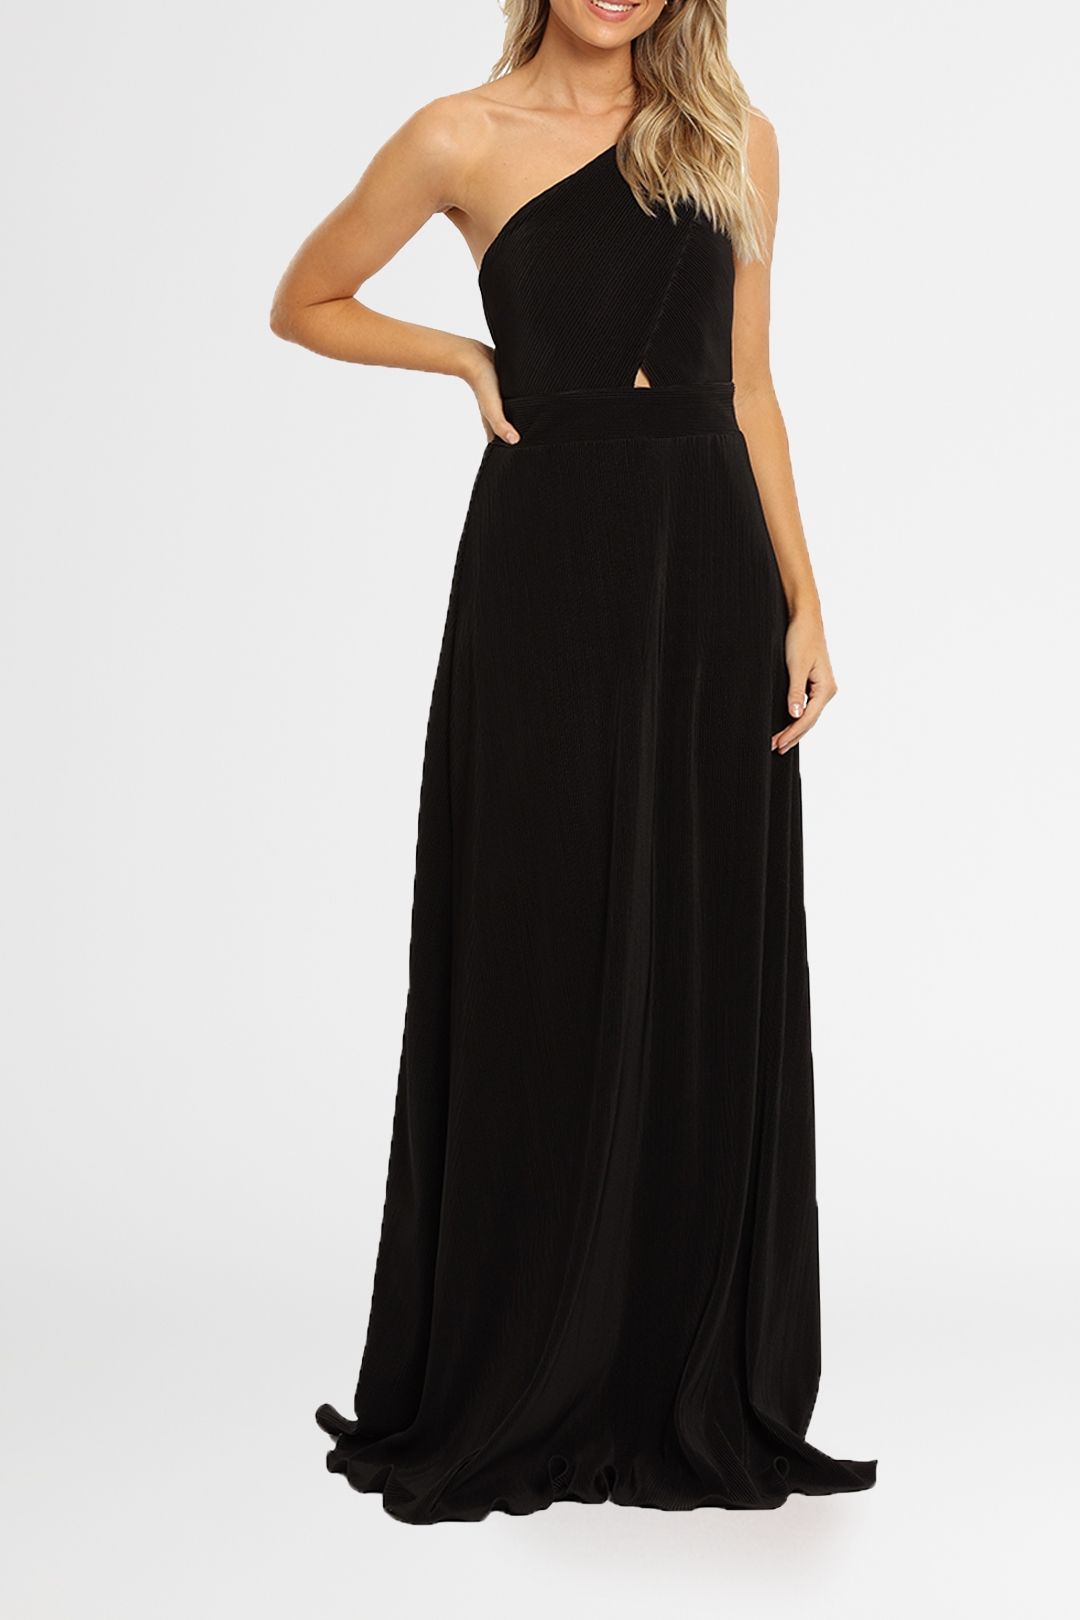 Langhem Dior Gown Black